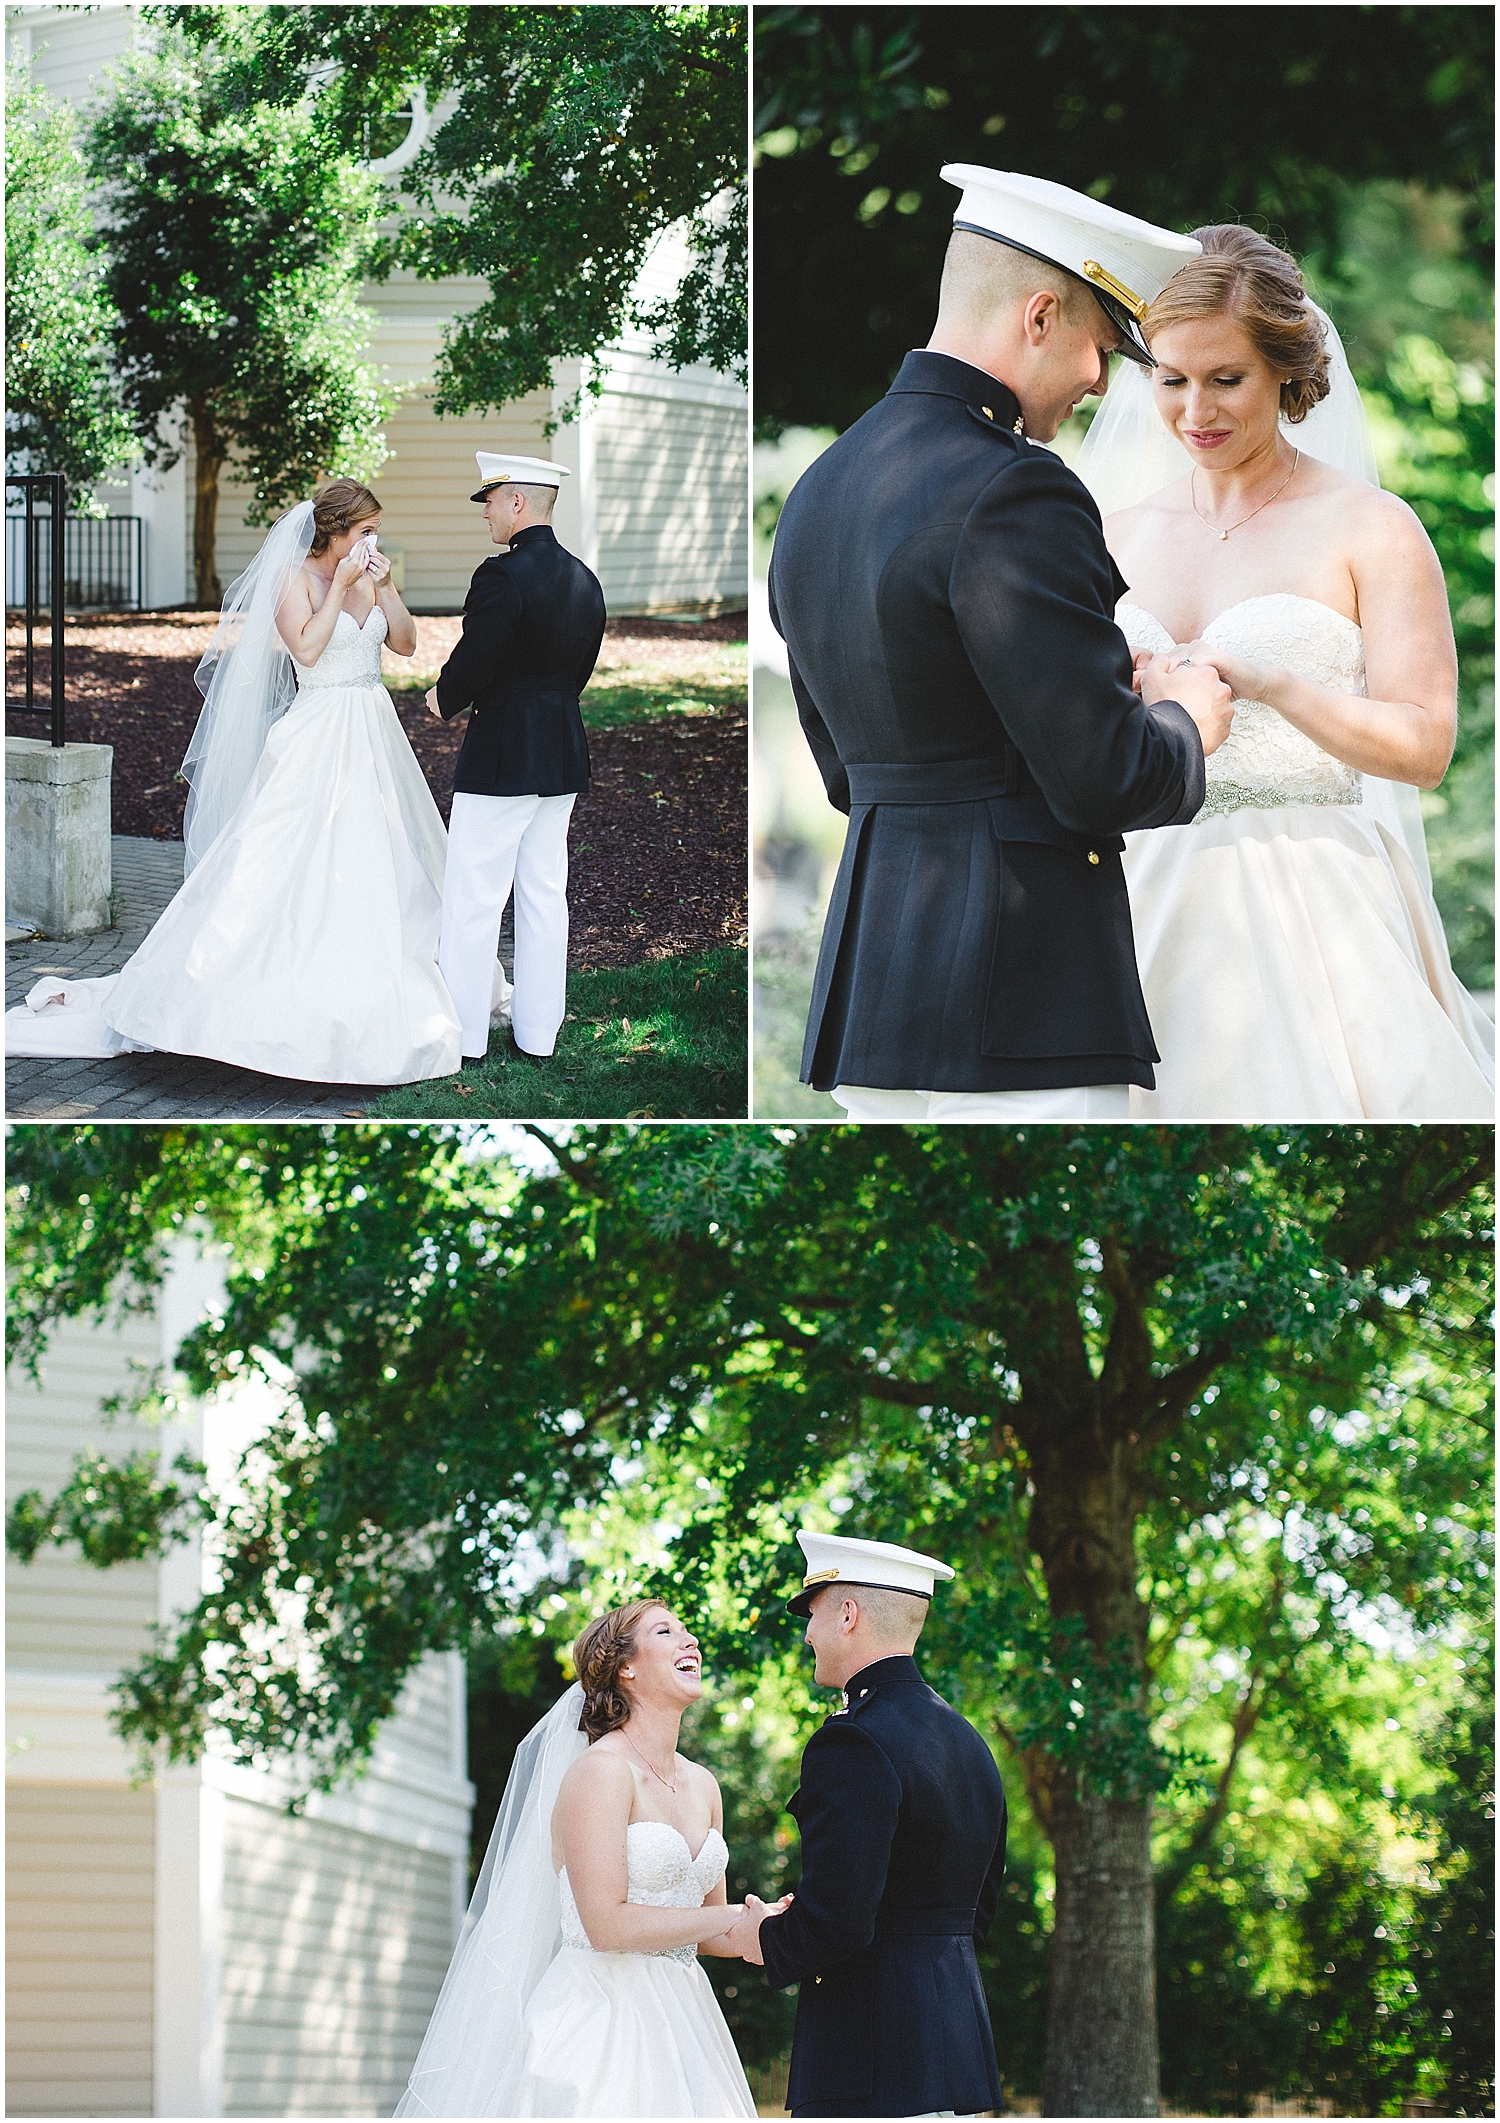 First Look - Savannah, Atlanta, Charlotte, Asheville, Raleigh Wedding Photographer